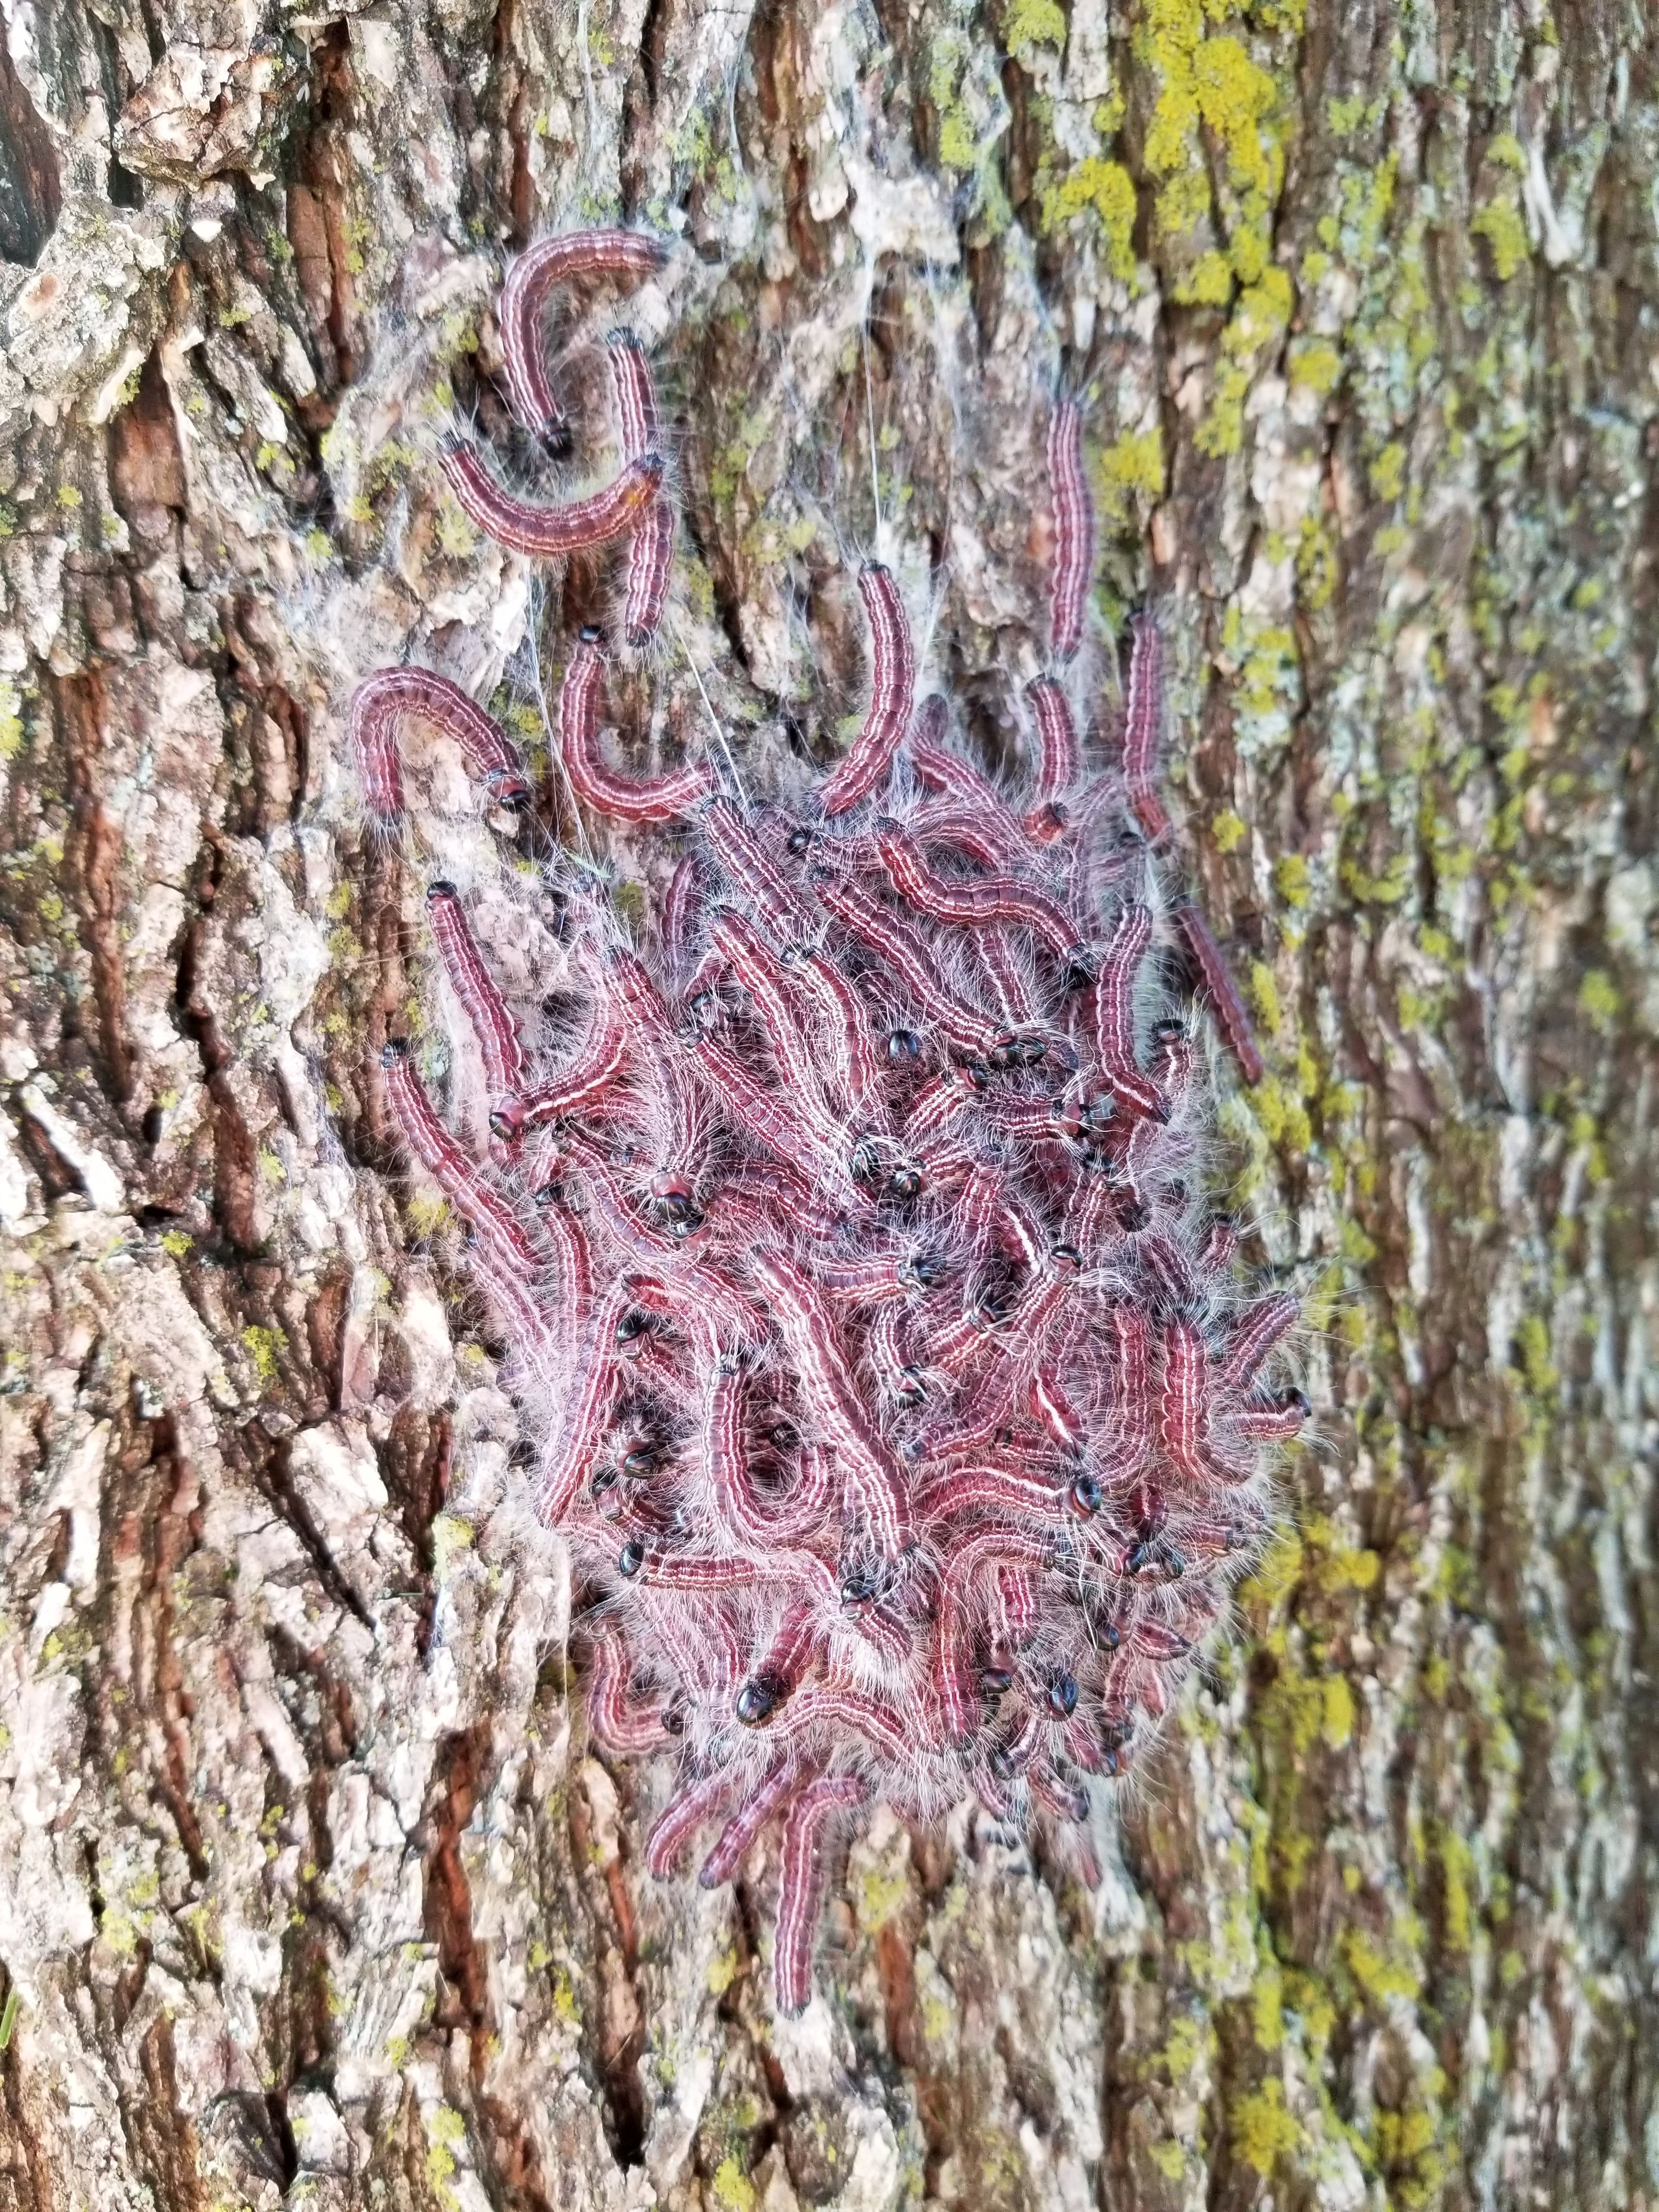 Dozens of walnut caterpillars on the bark of a tree. 